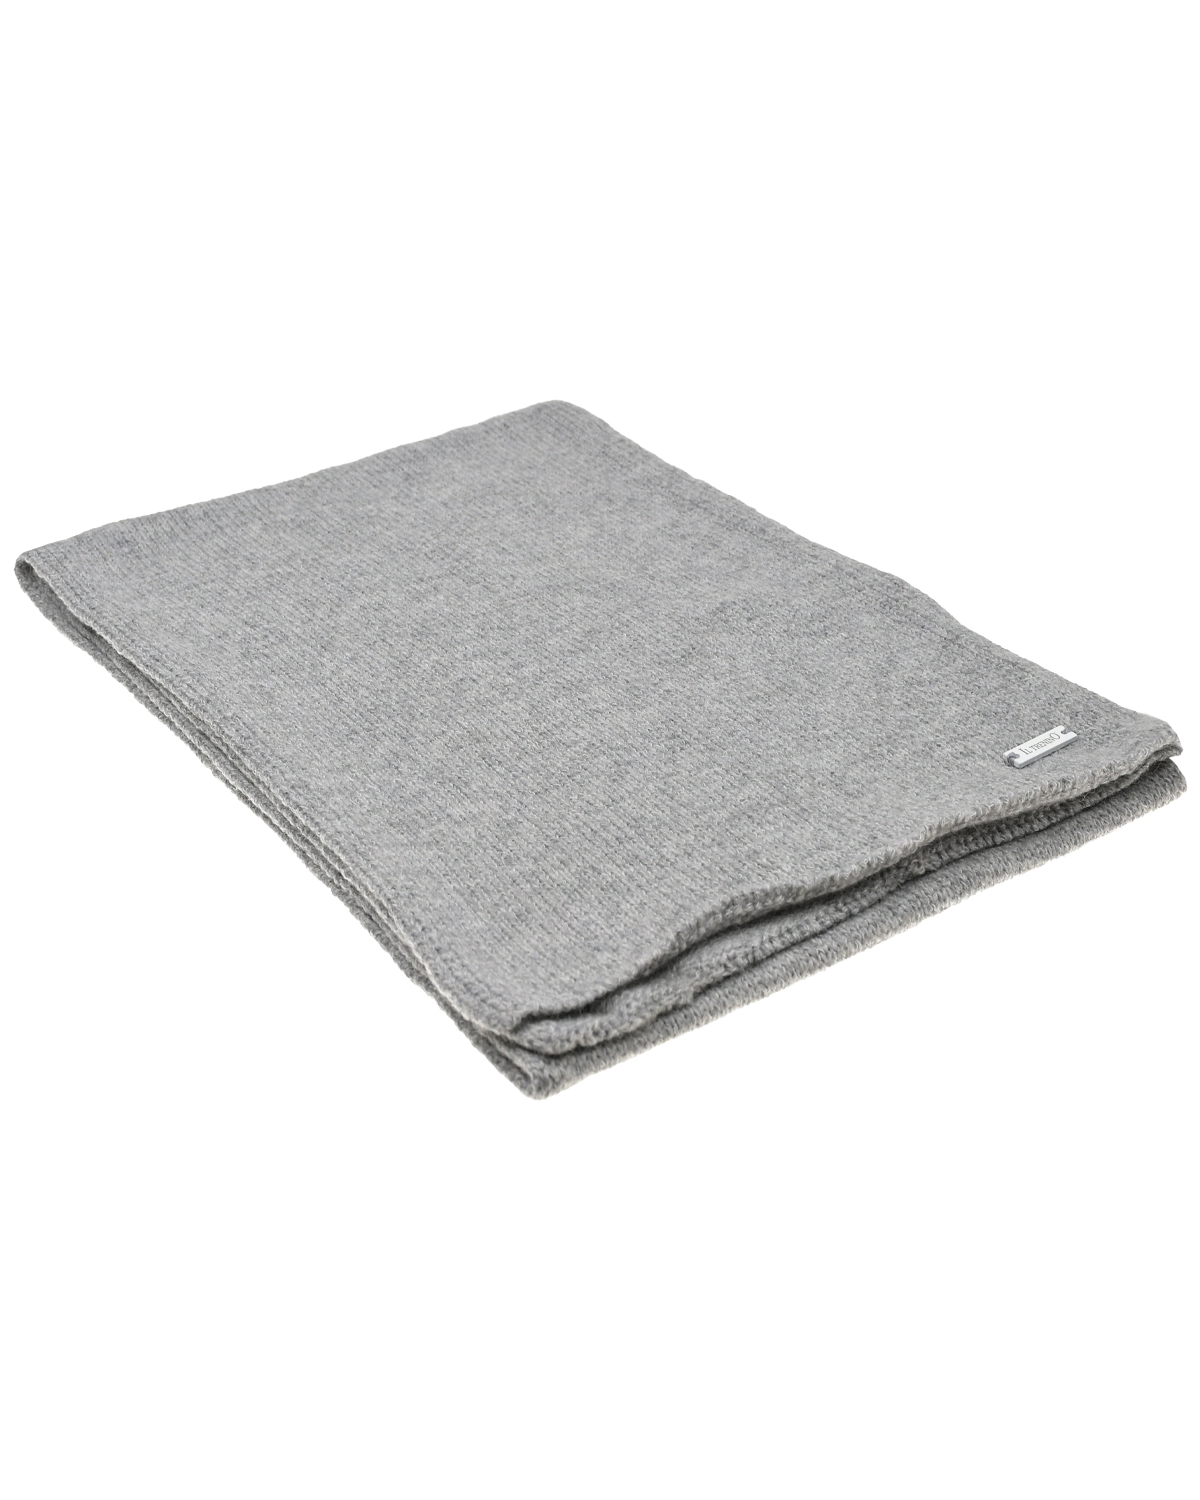 Серый шарф из шерсти и кашемира, 160x30 см Il Trenino детский, размер unica